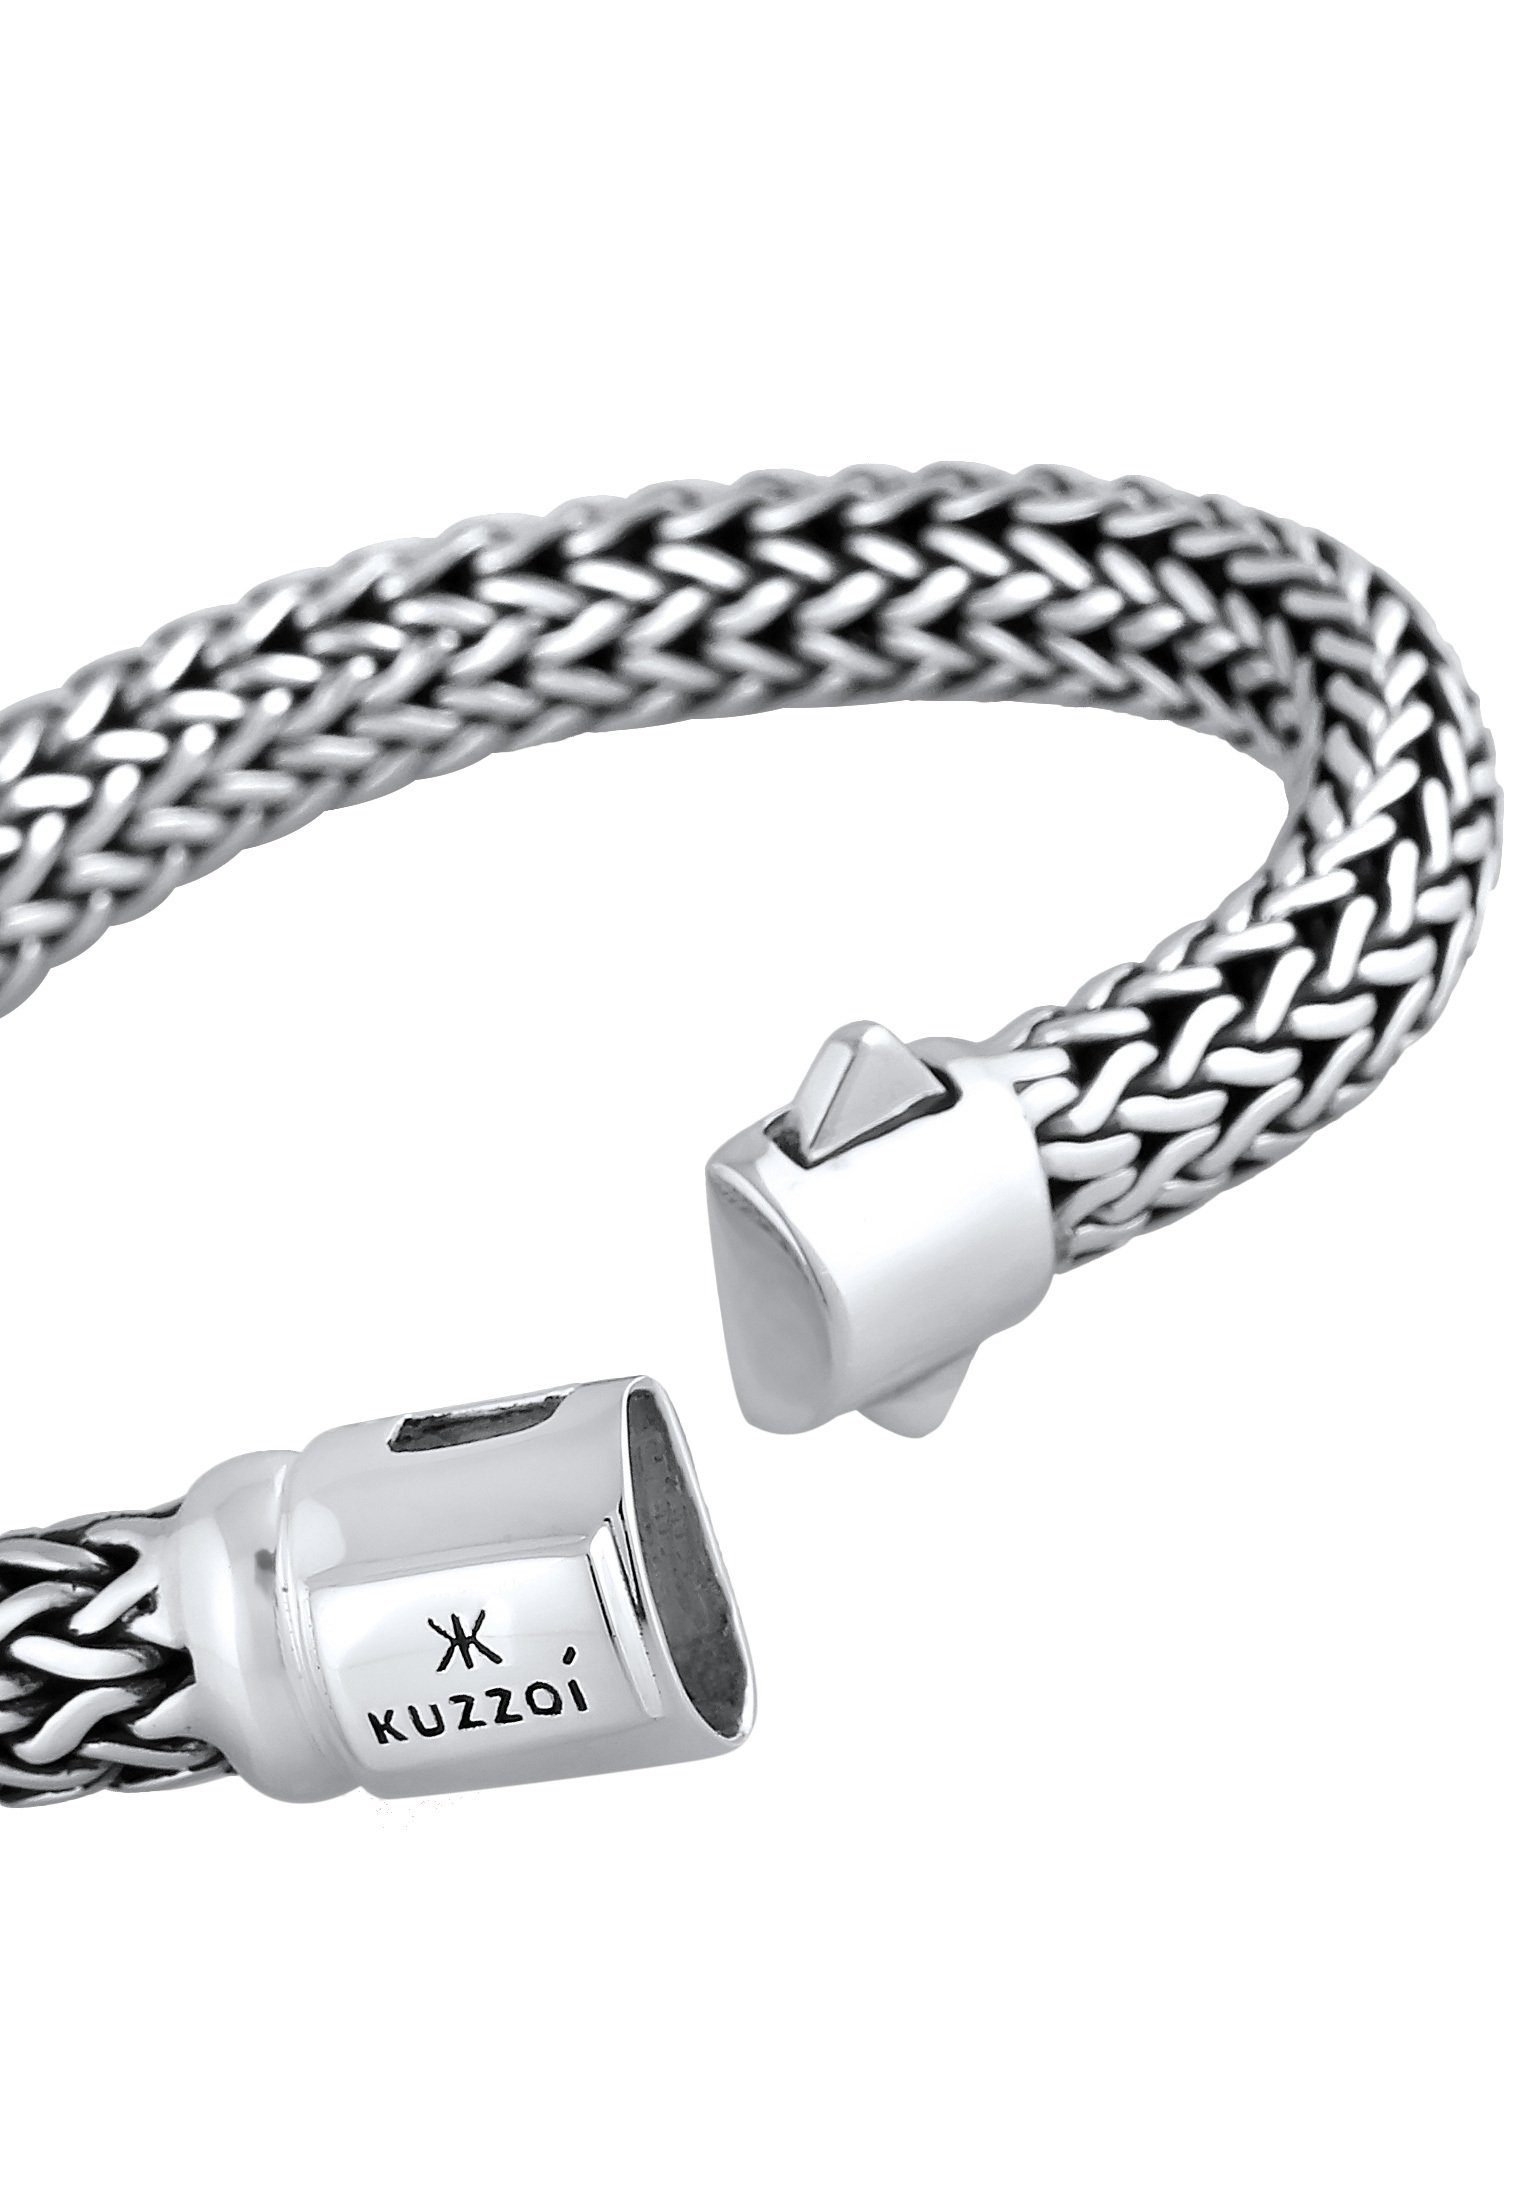 Armband Cool unisex Silber 925 Kuzzoi Basic Gliederarmband